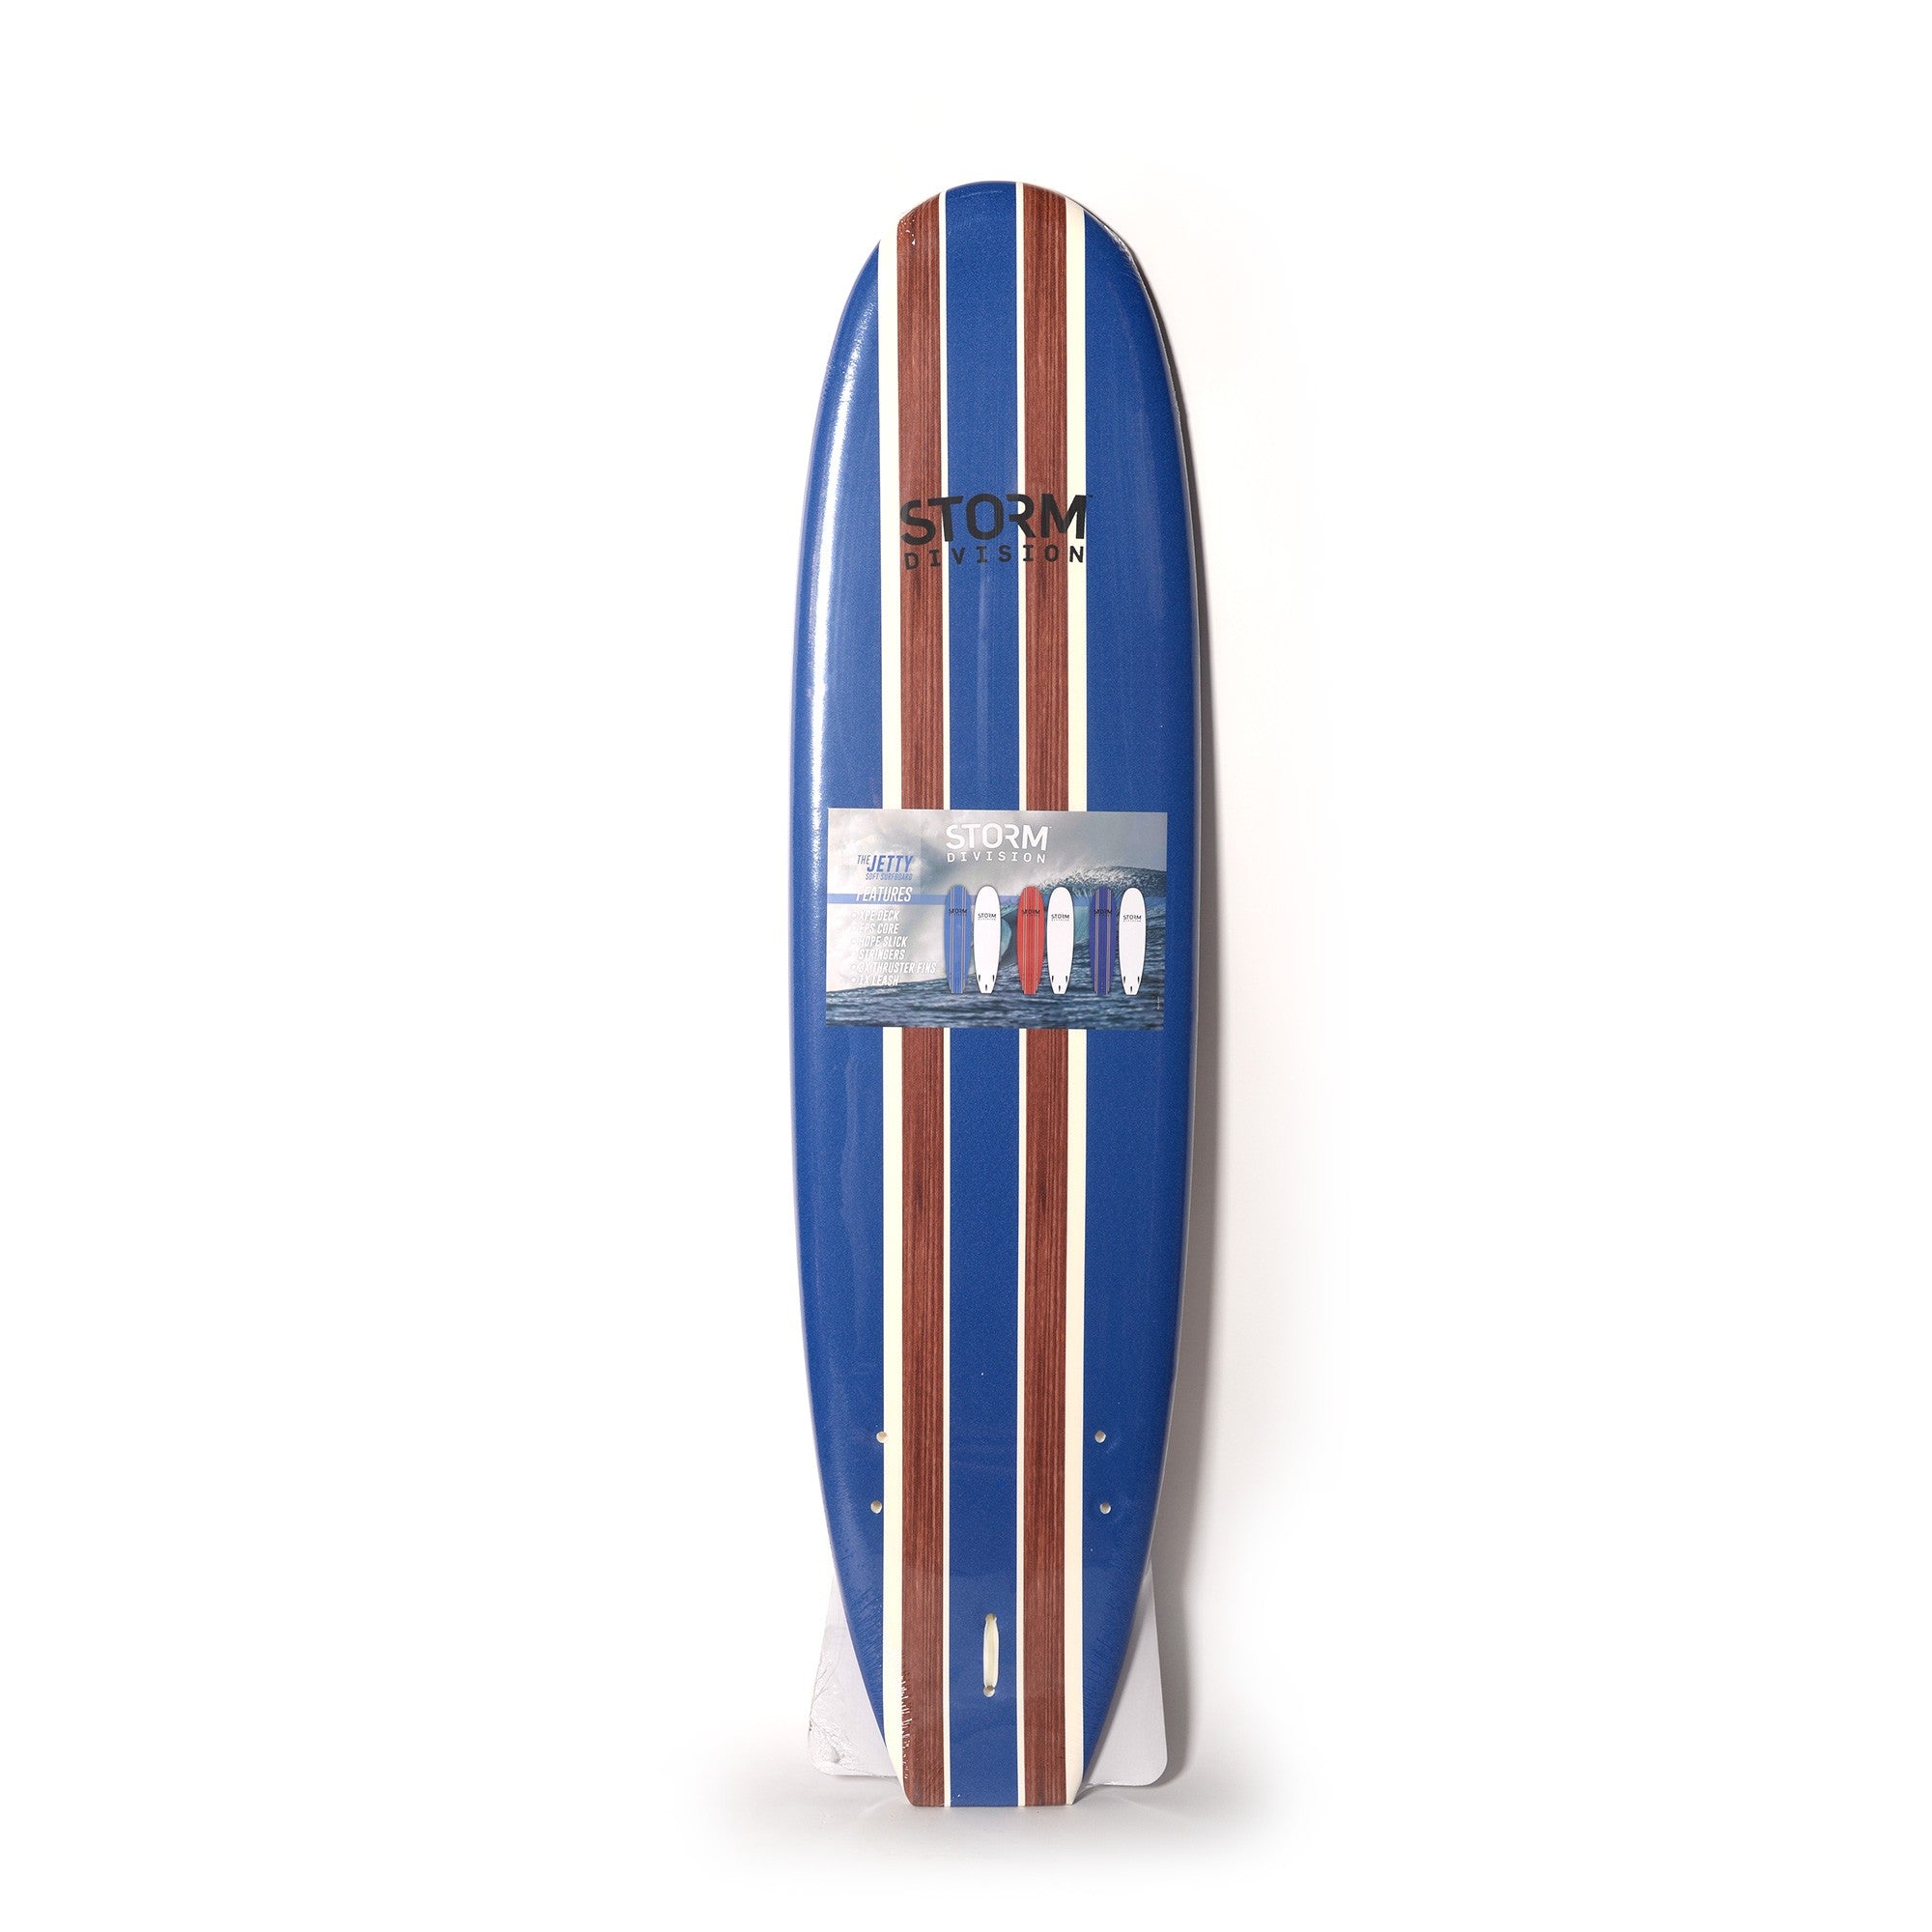 STORM DIVISION - Jetty Softboard - Foam Surfboard - 7'0 - Dark blue